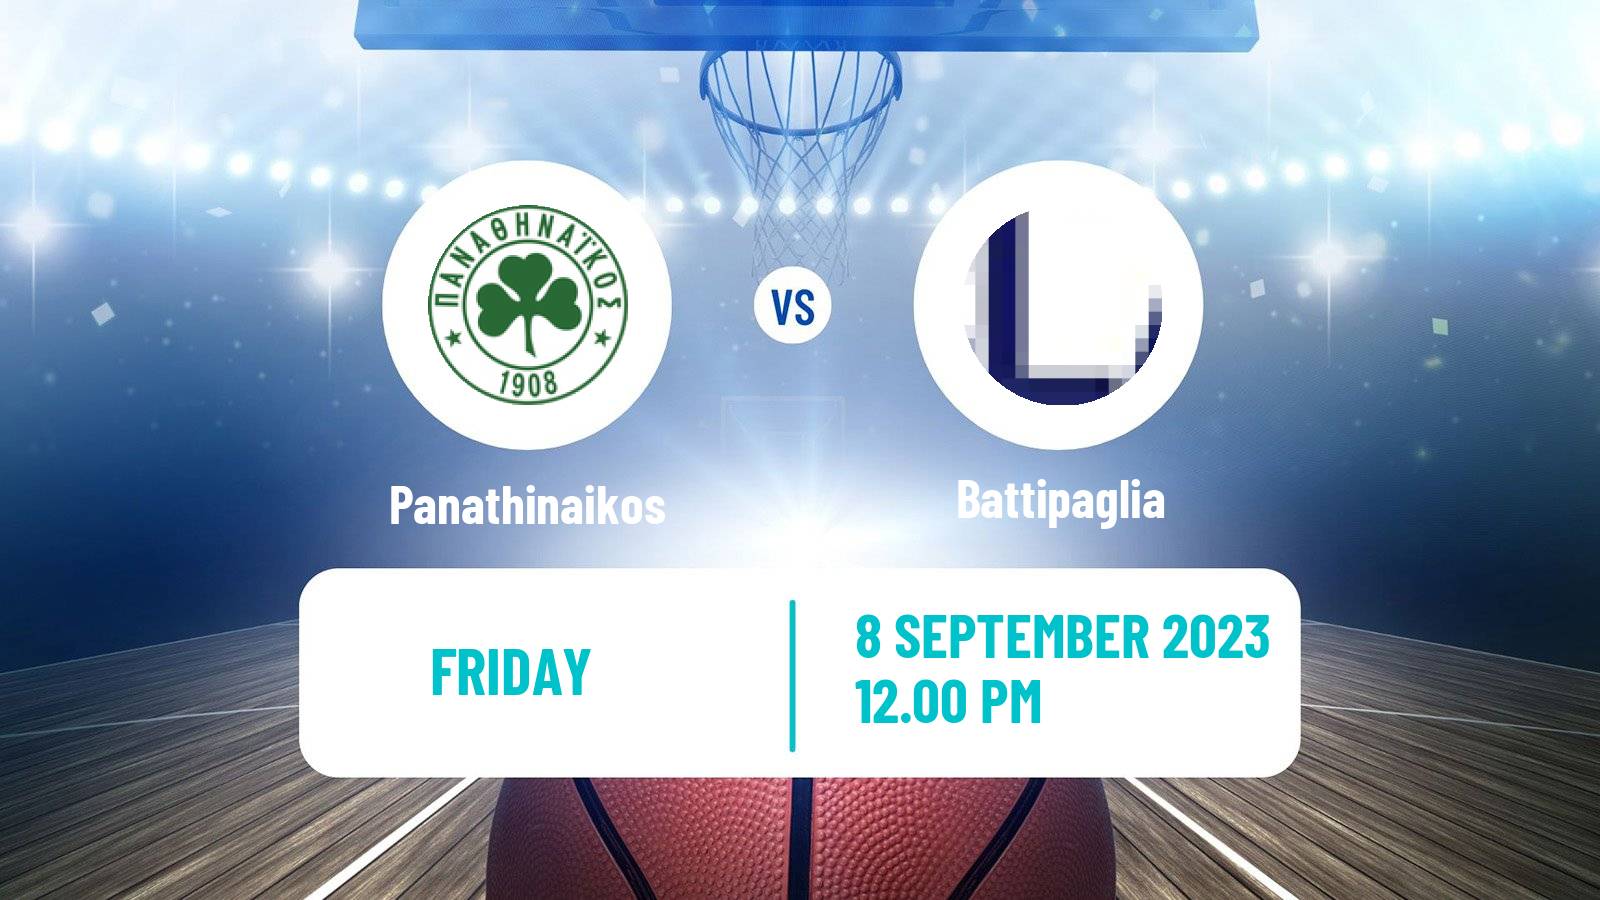 Basketball Club Friendly Basketball Women Panathinaikos - Battipaglia